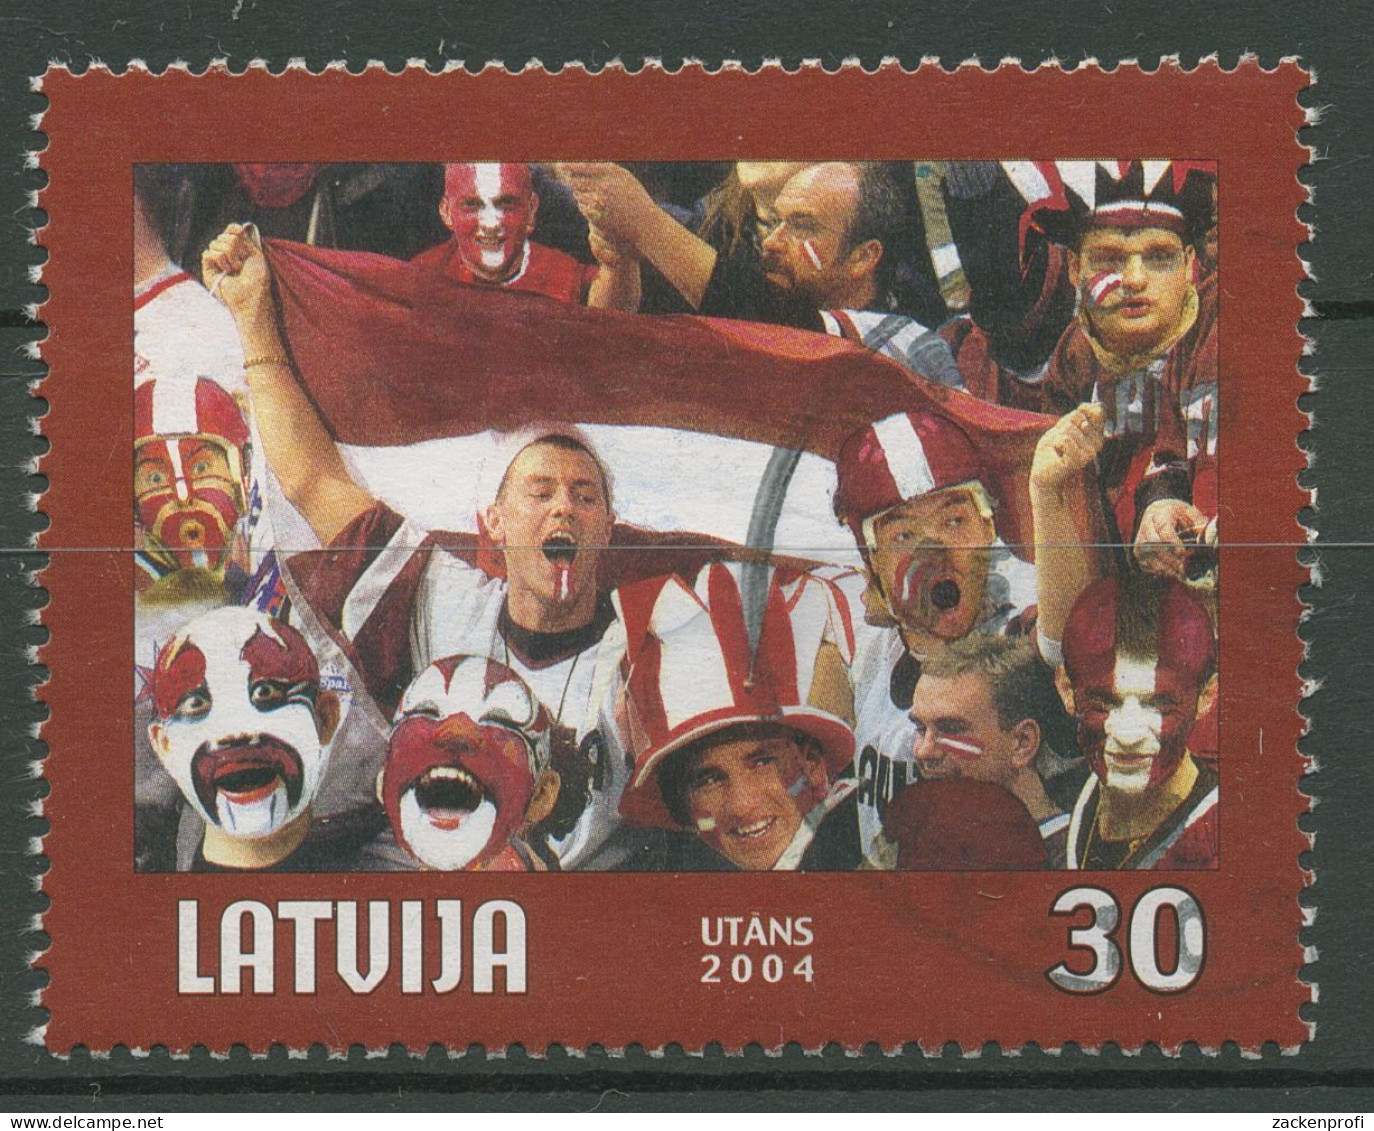 Lettland 2004 Eishockey-WM Riga 610 A Gestempelt - Latvia